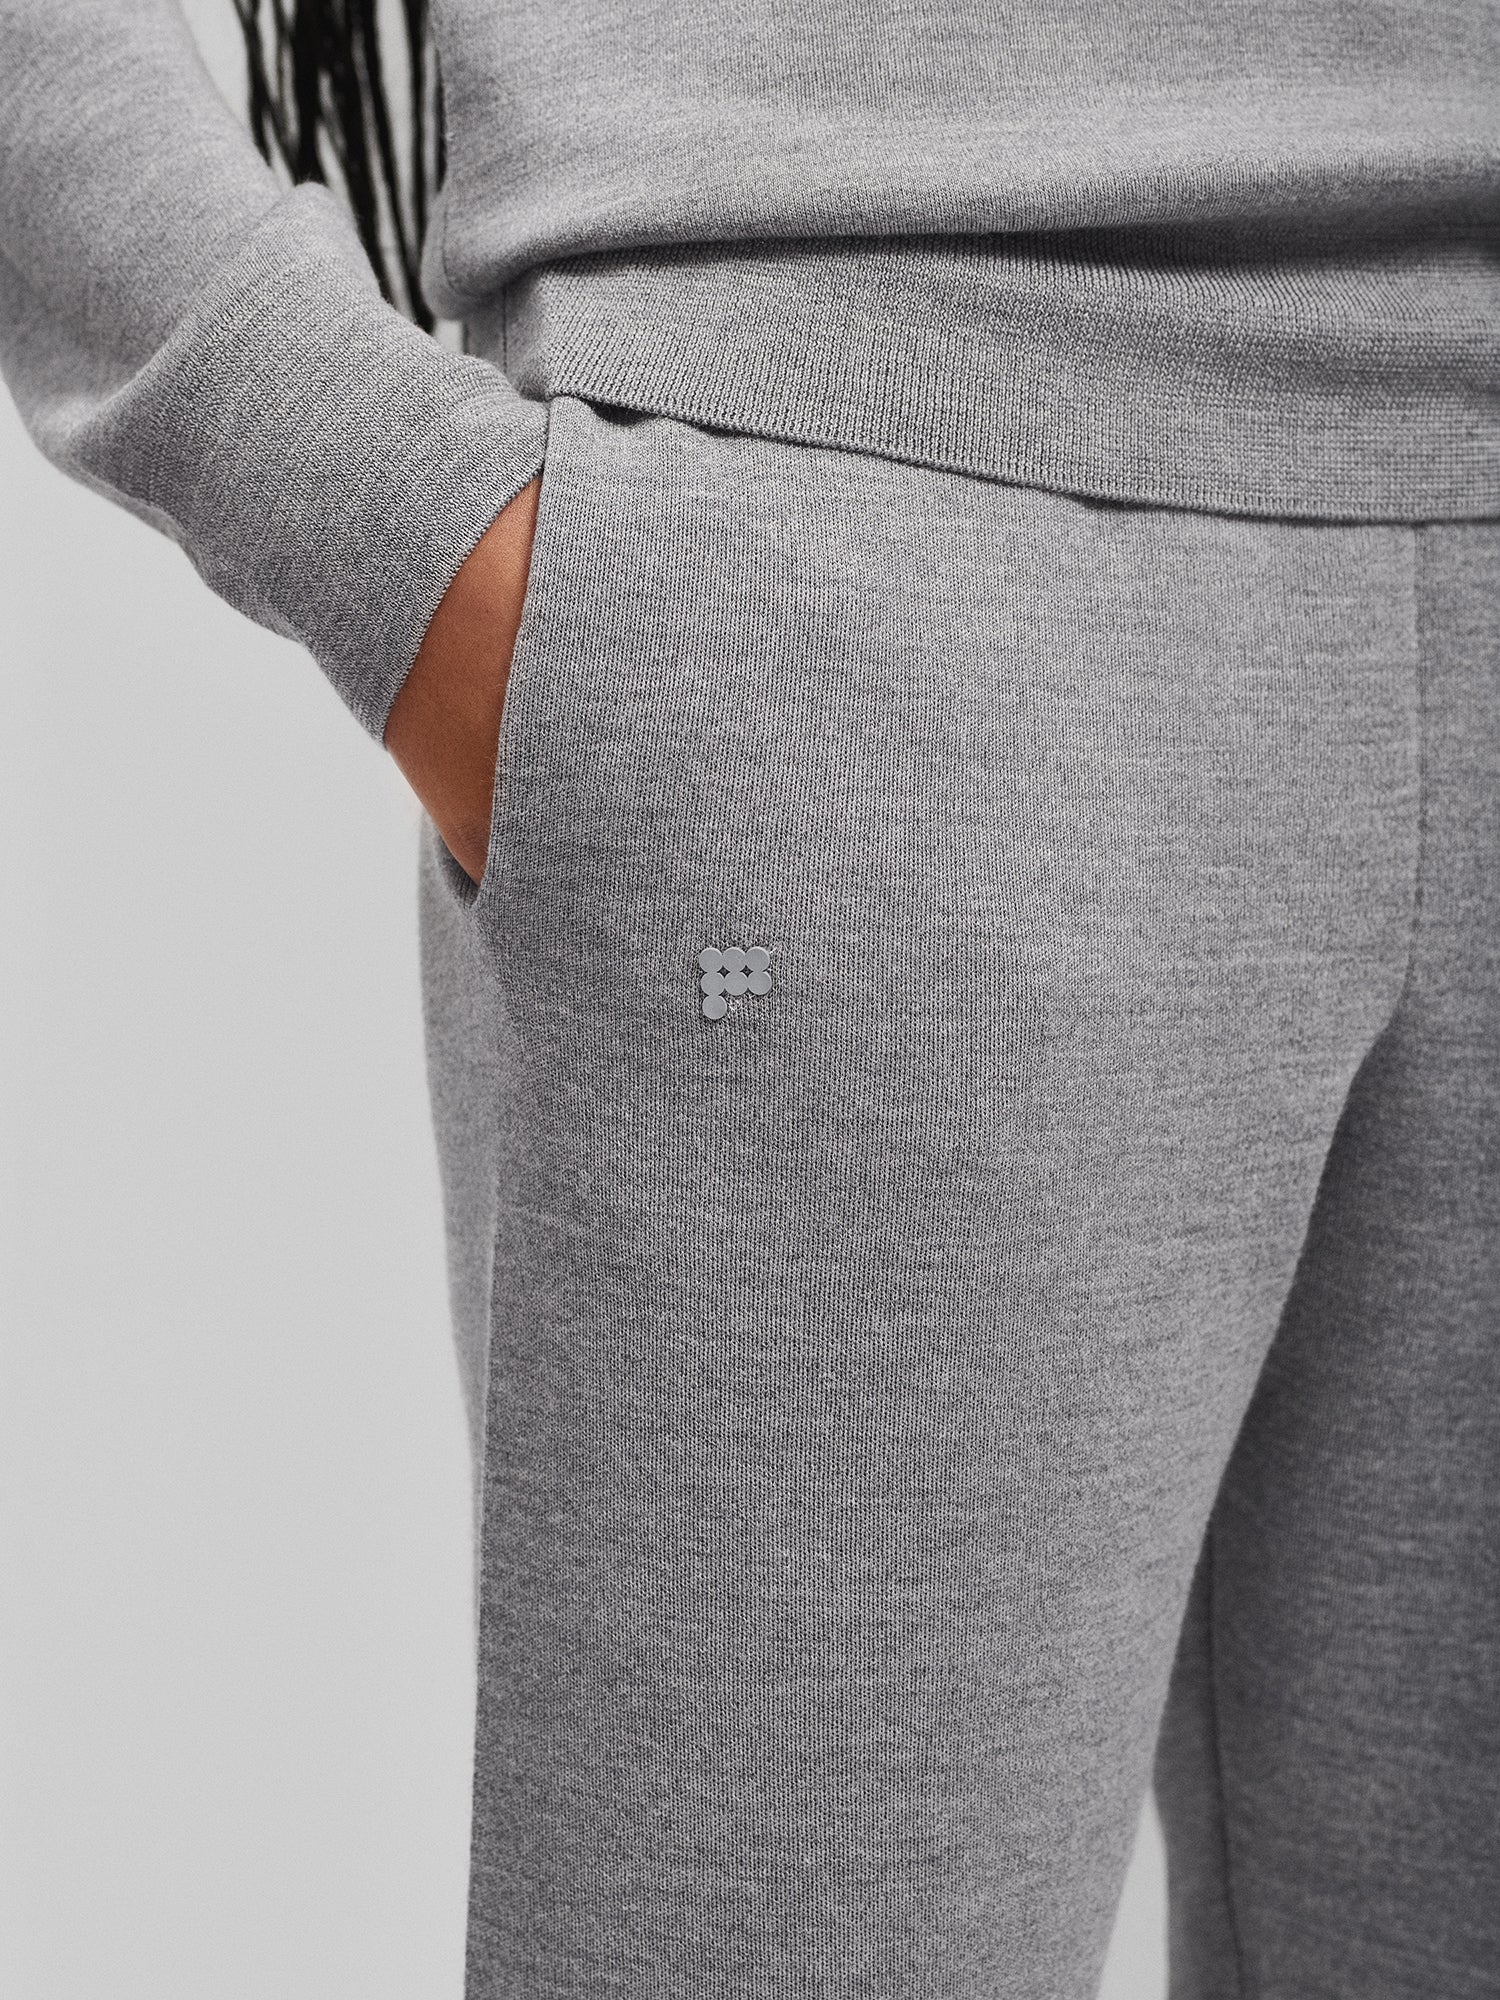 Brilliant Basics Women's Basic Fleece Track Pants - Grey Marl